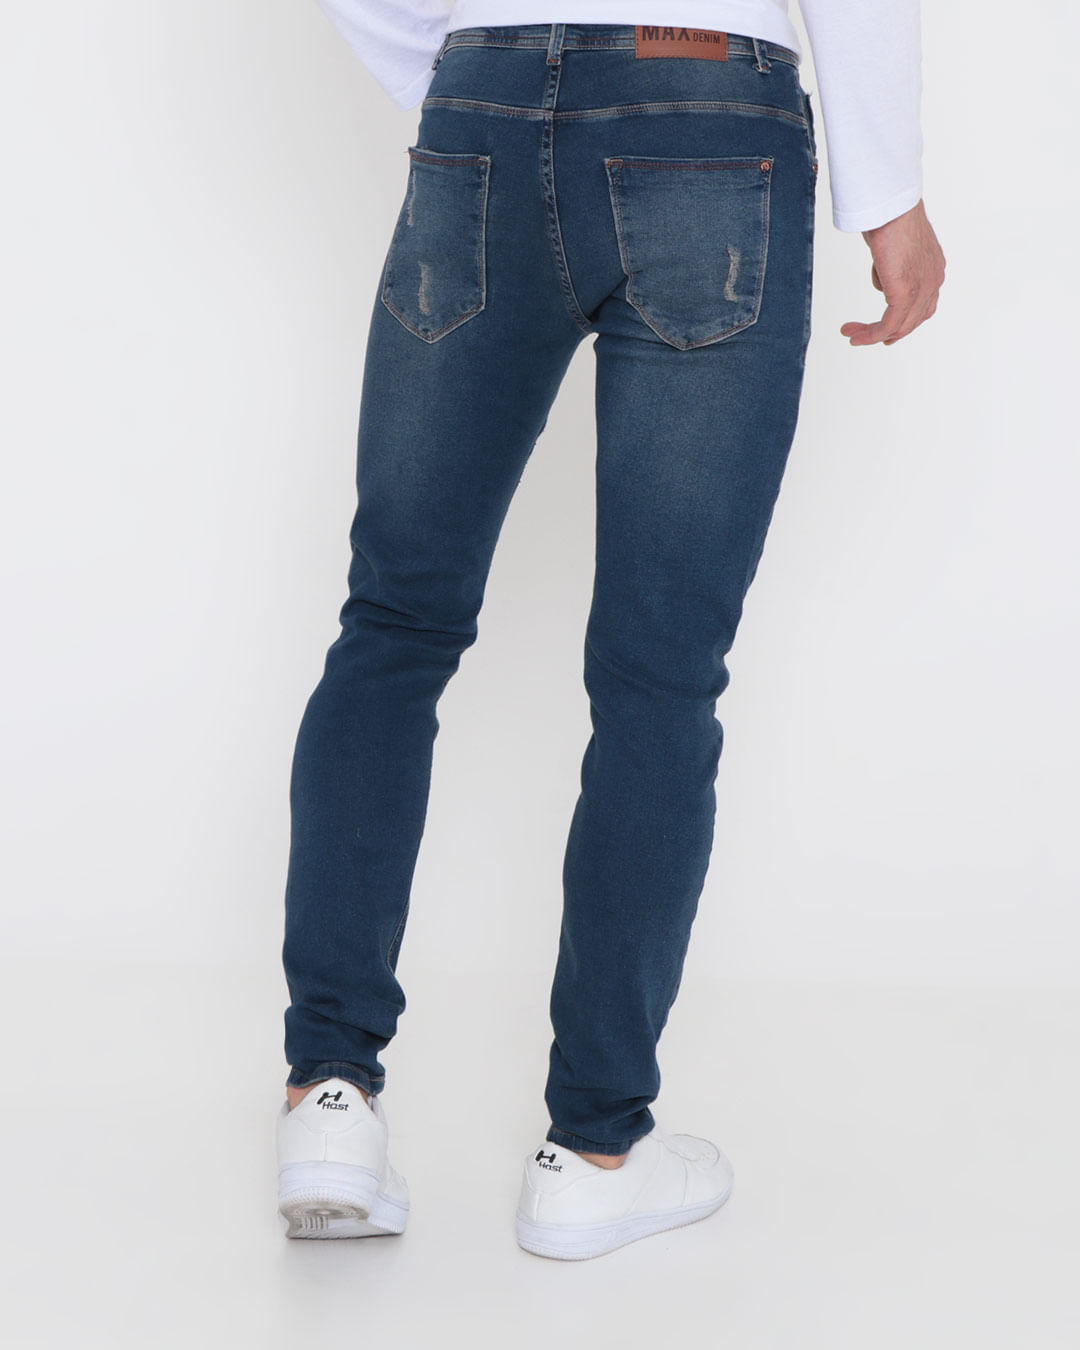 Calca-Jeans-Poidos-Slim-Masculina-Azul-Medio